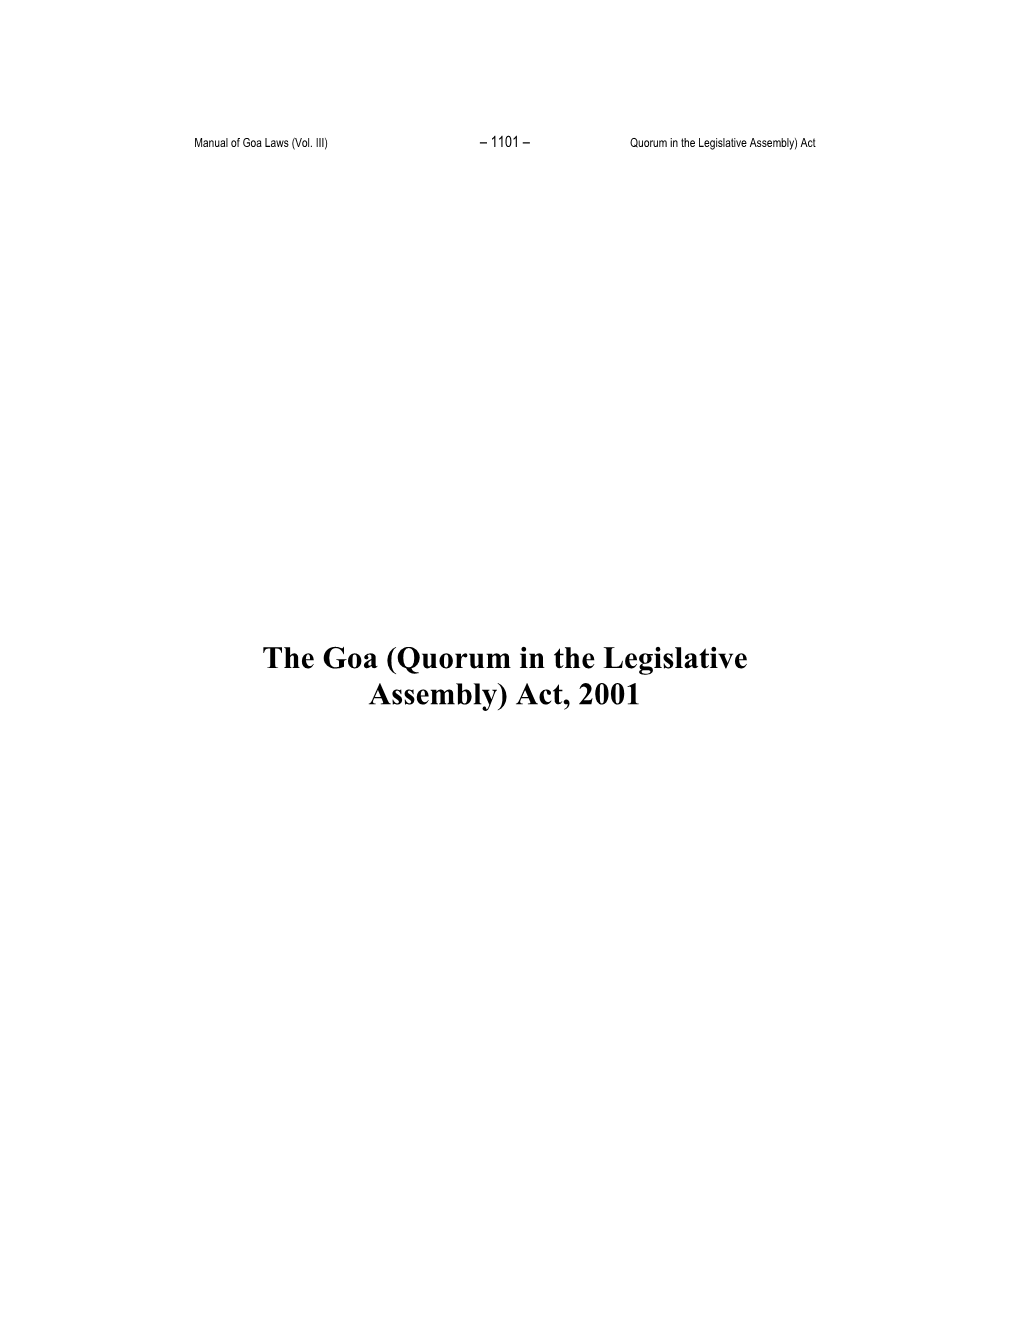 The Goa (Quorum in the Legislative Assembly) Act, 2001